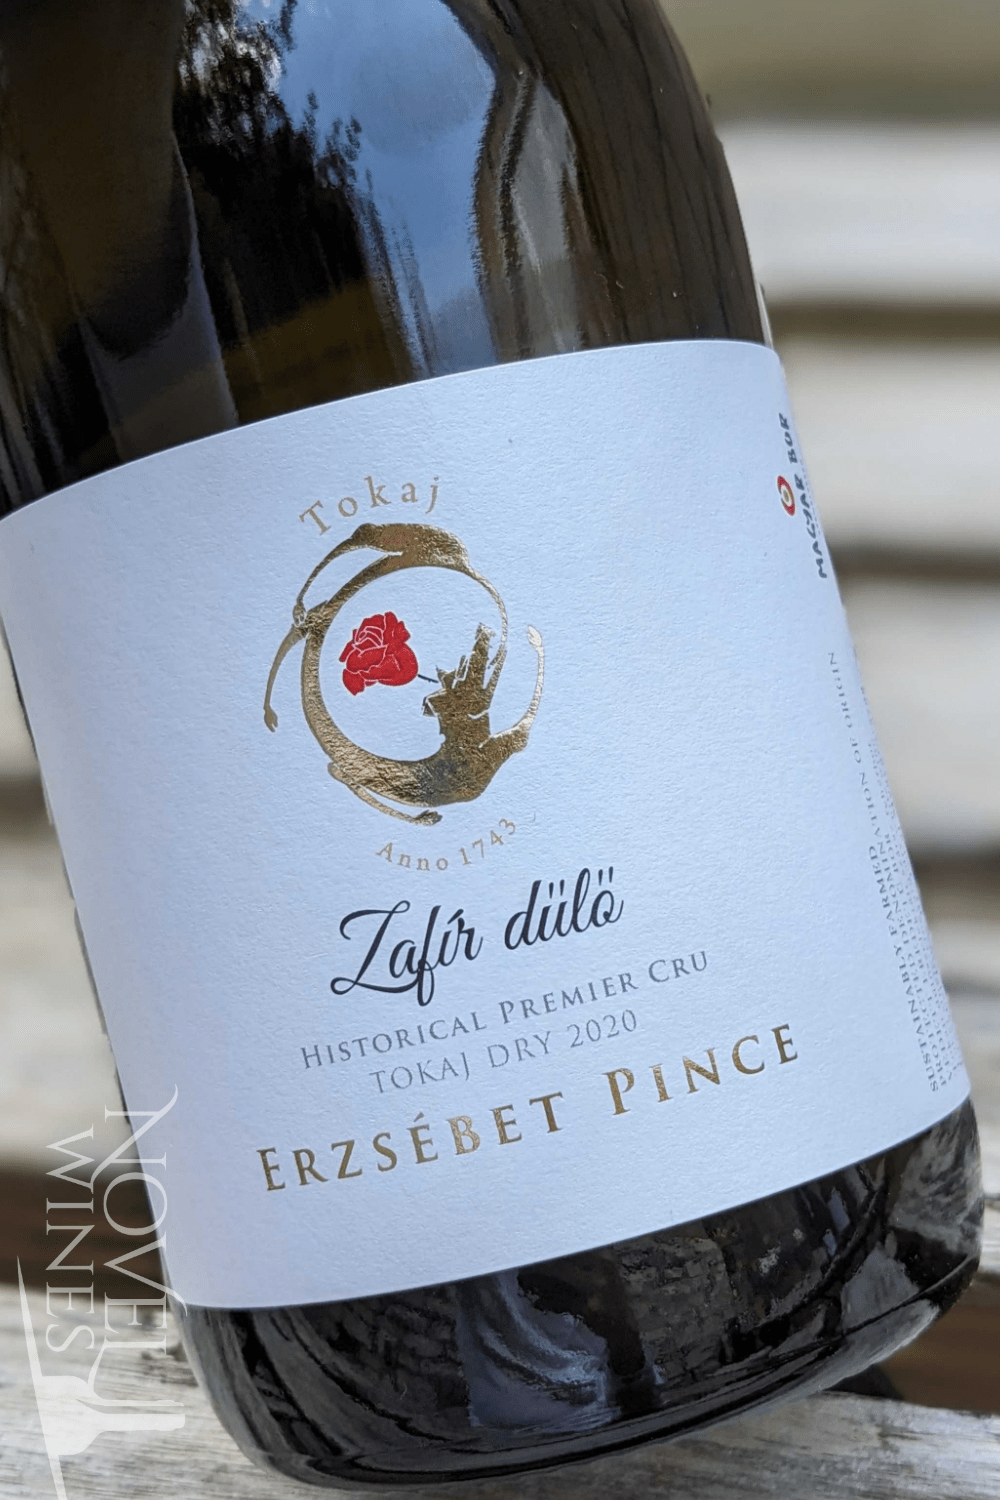 Erzsebet Pince White Wine Erzsebet Pince Zafir Dűlő Single Vineyard 2020, Hungary